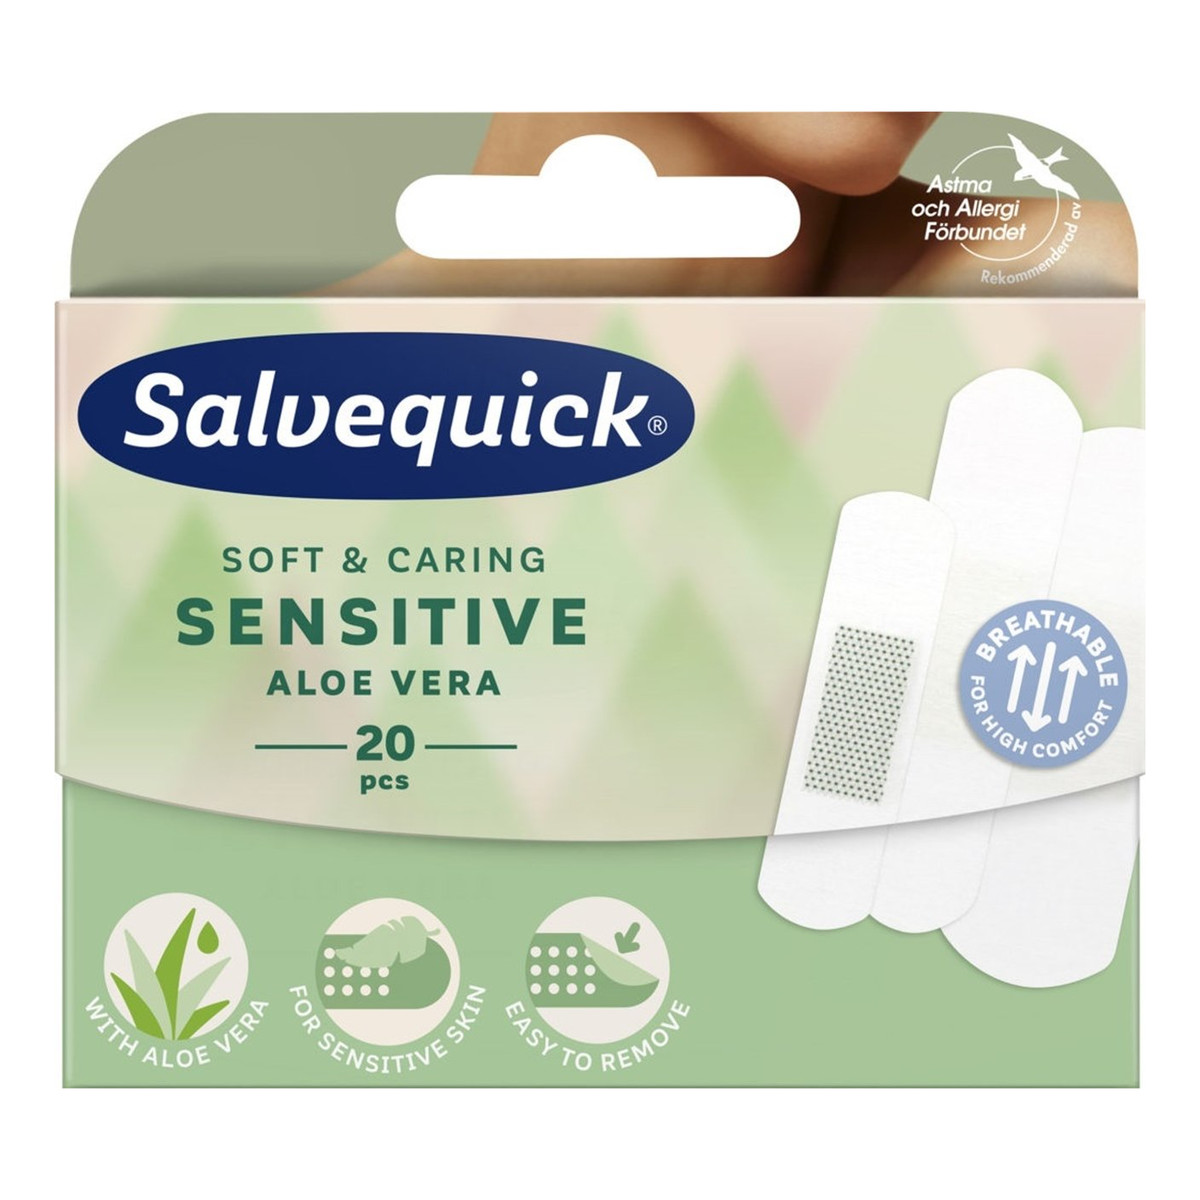 Salvequick Sensitive plastry opatrunkowe Aloe Vera 20 sztuk